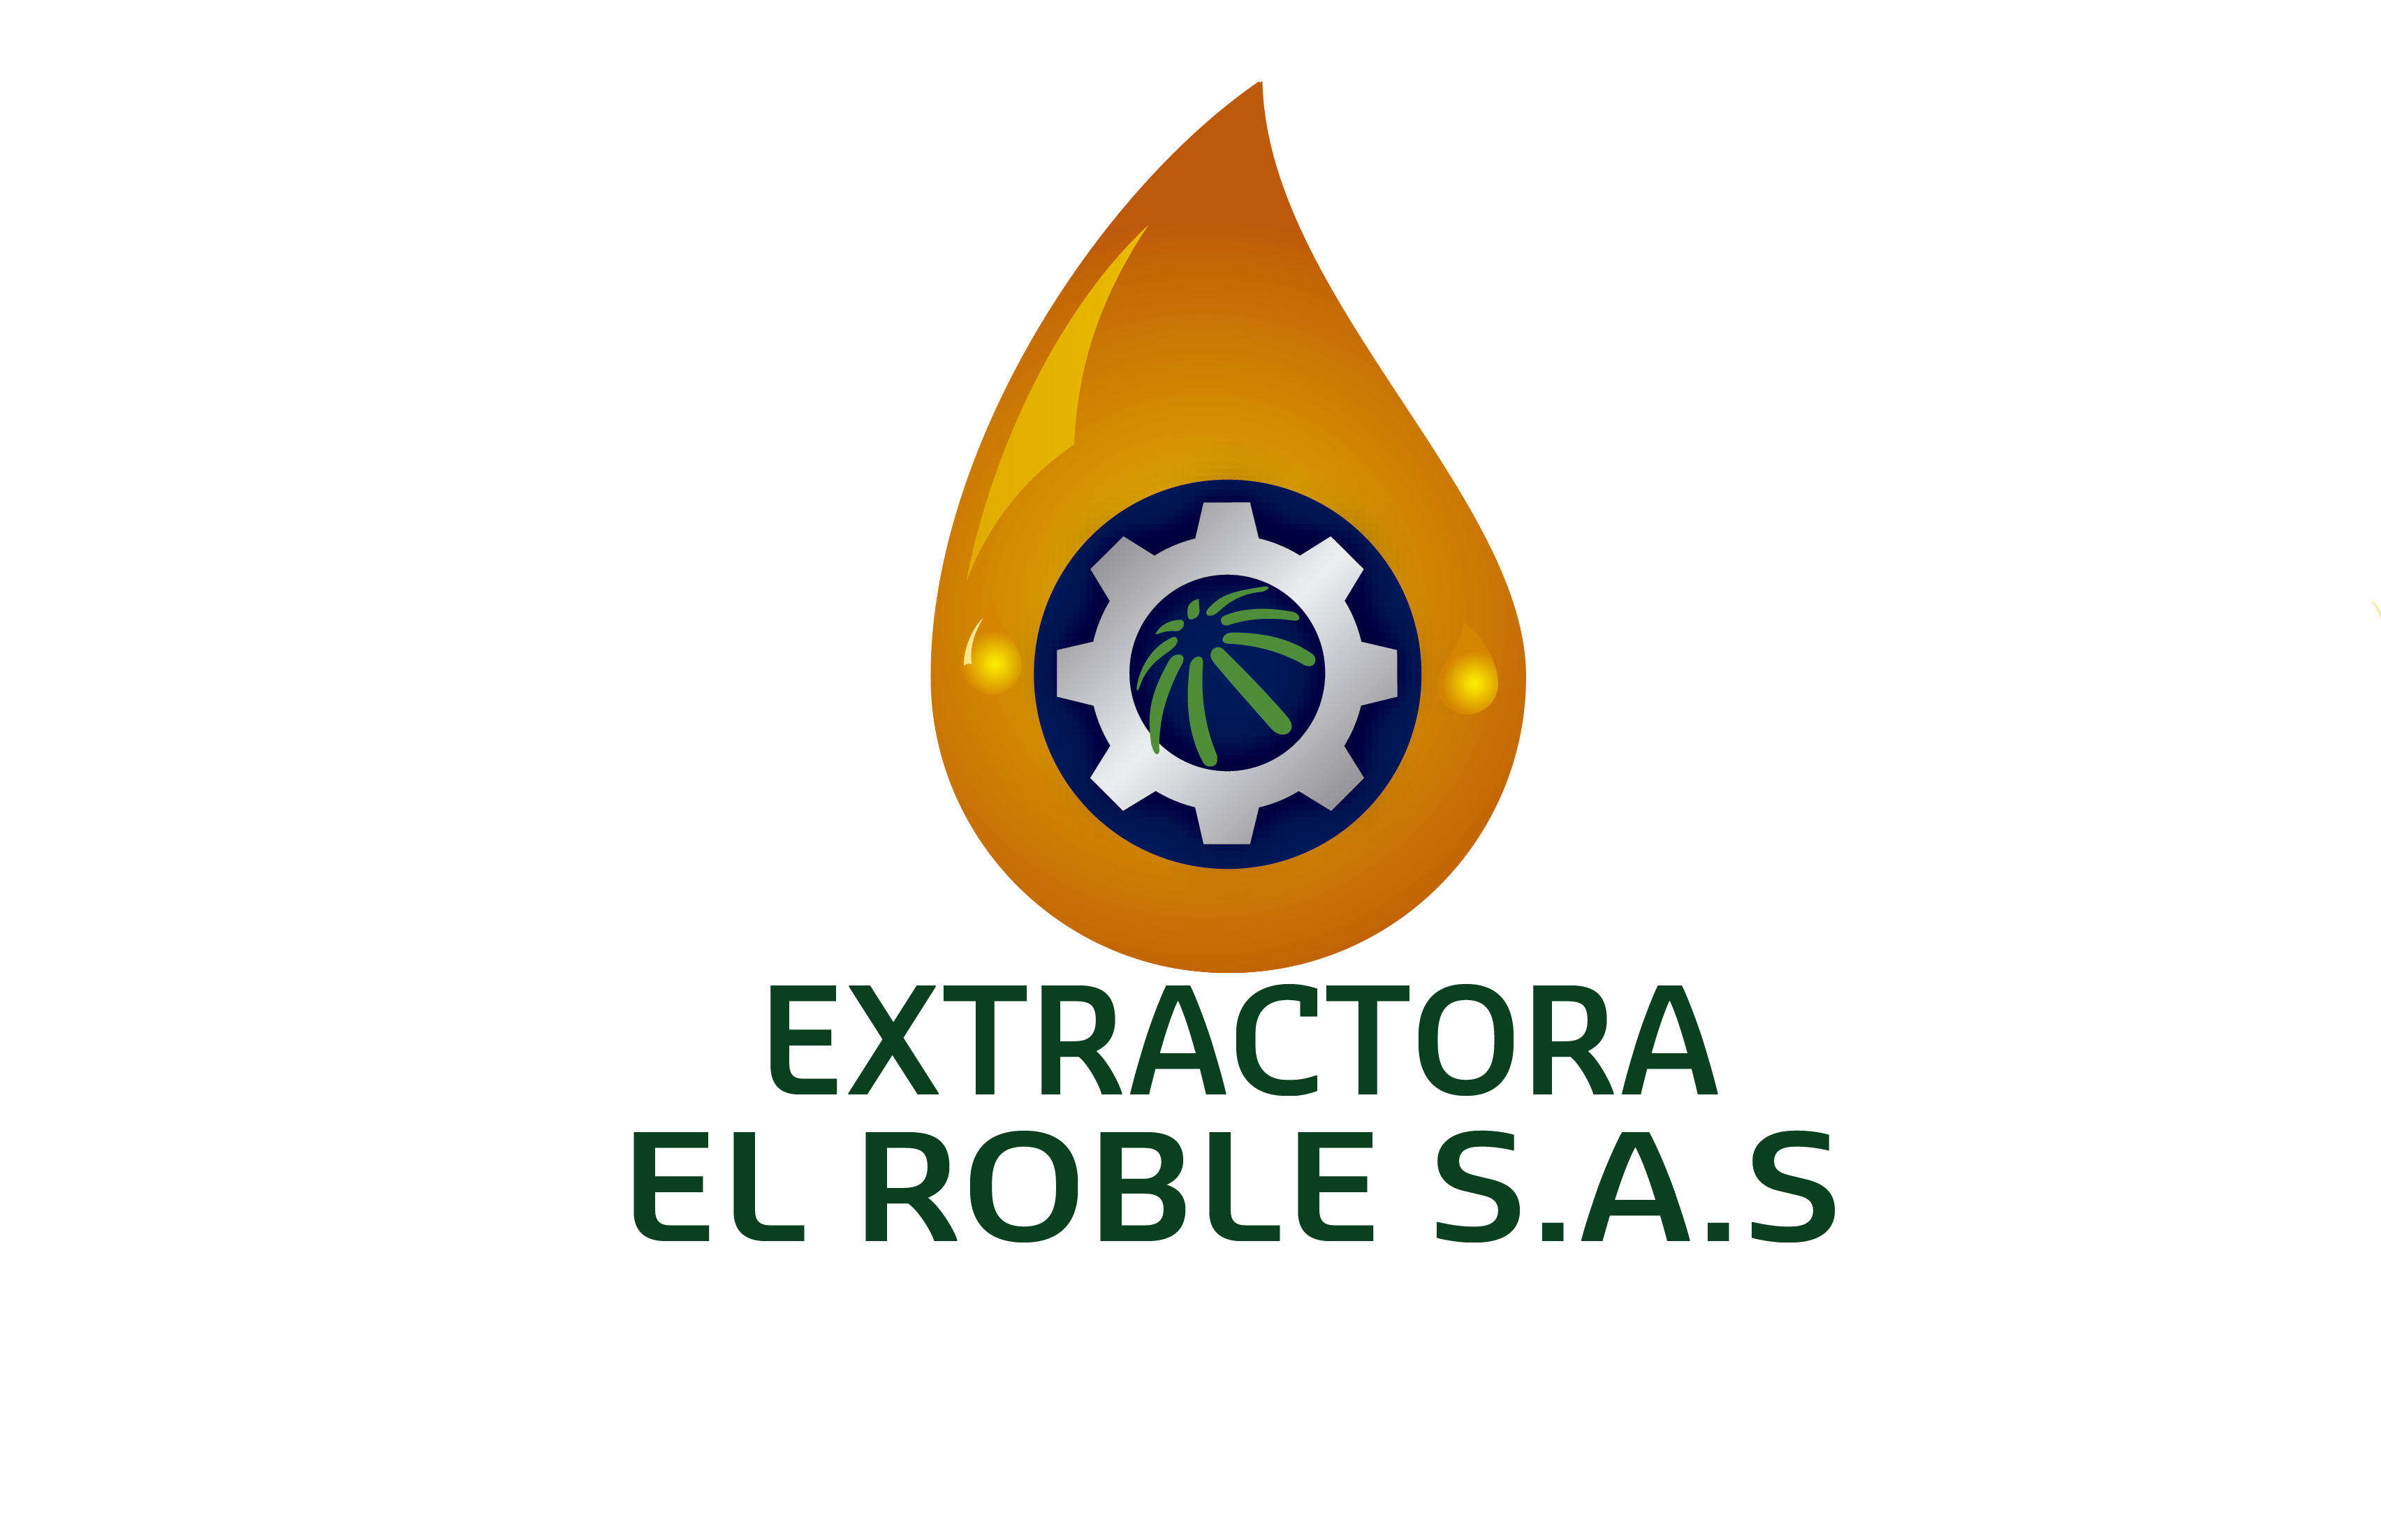 EXTRACTORA EL ROBLE S.A.S